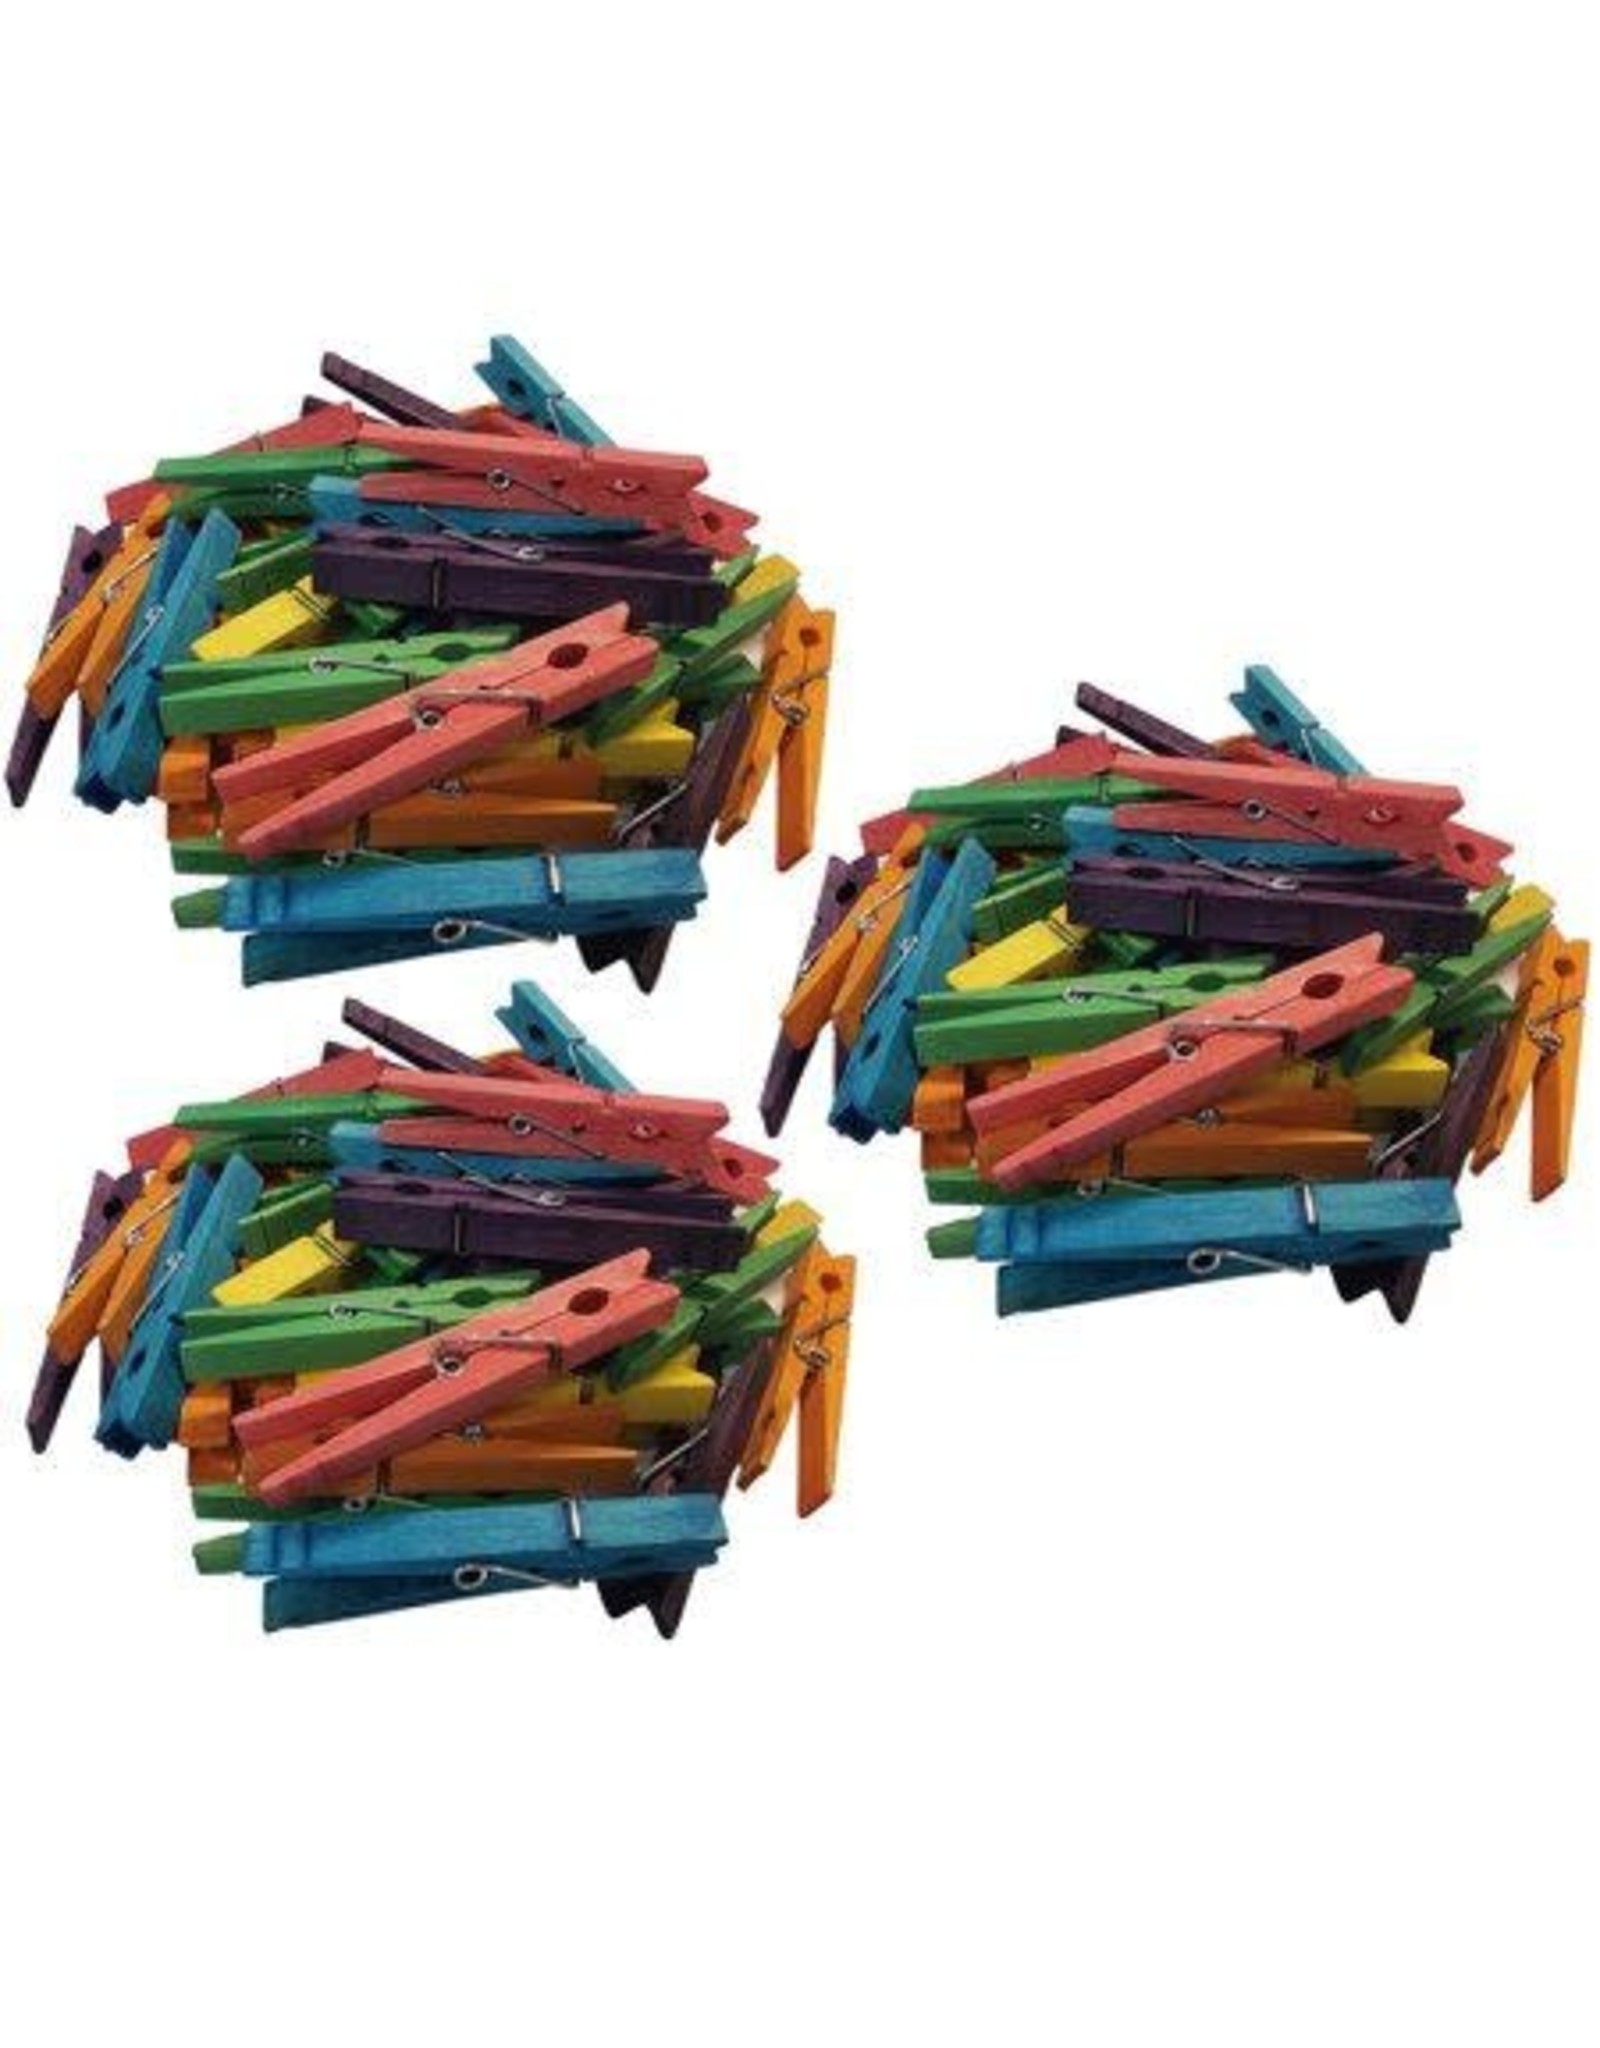 STEM Basics Multicolor Clothespins 50pcs